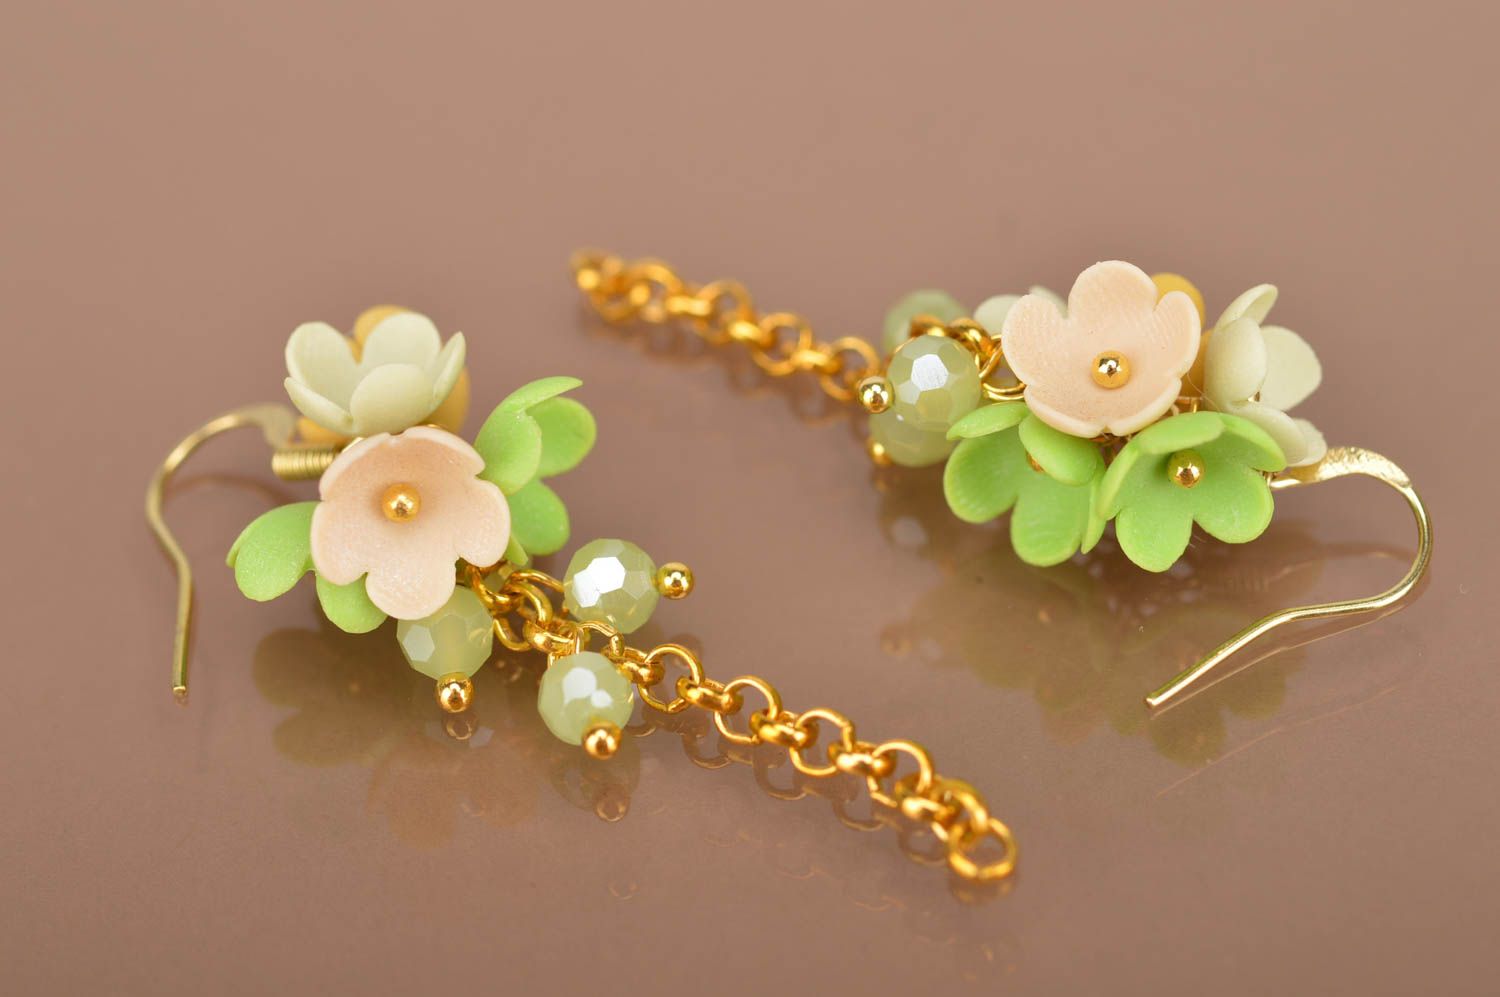 Gentle handmade polymer clay flower earrings plastic earrings designs gift ideas photo 3